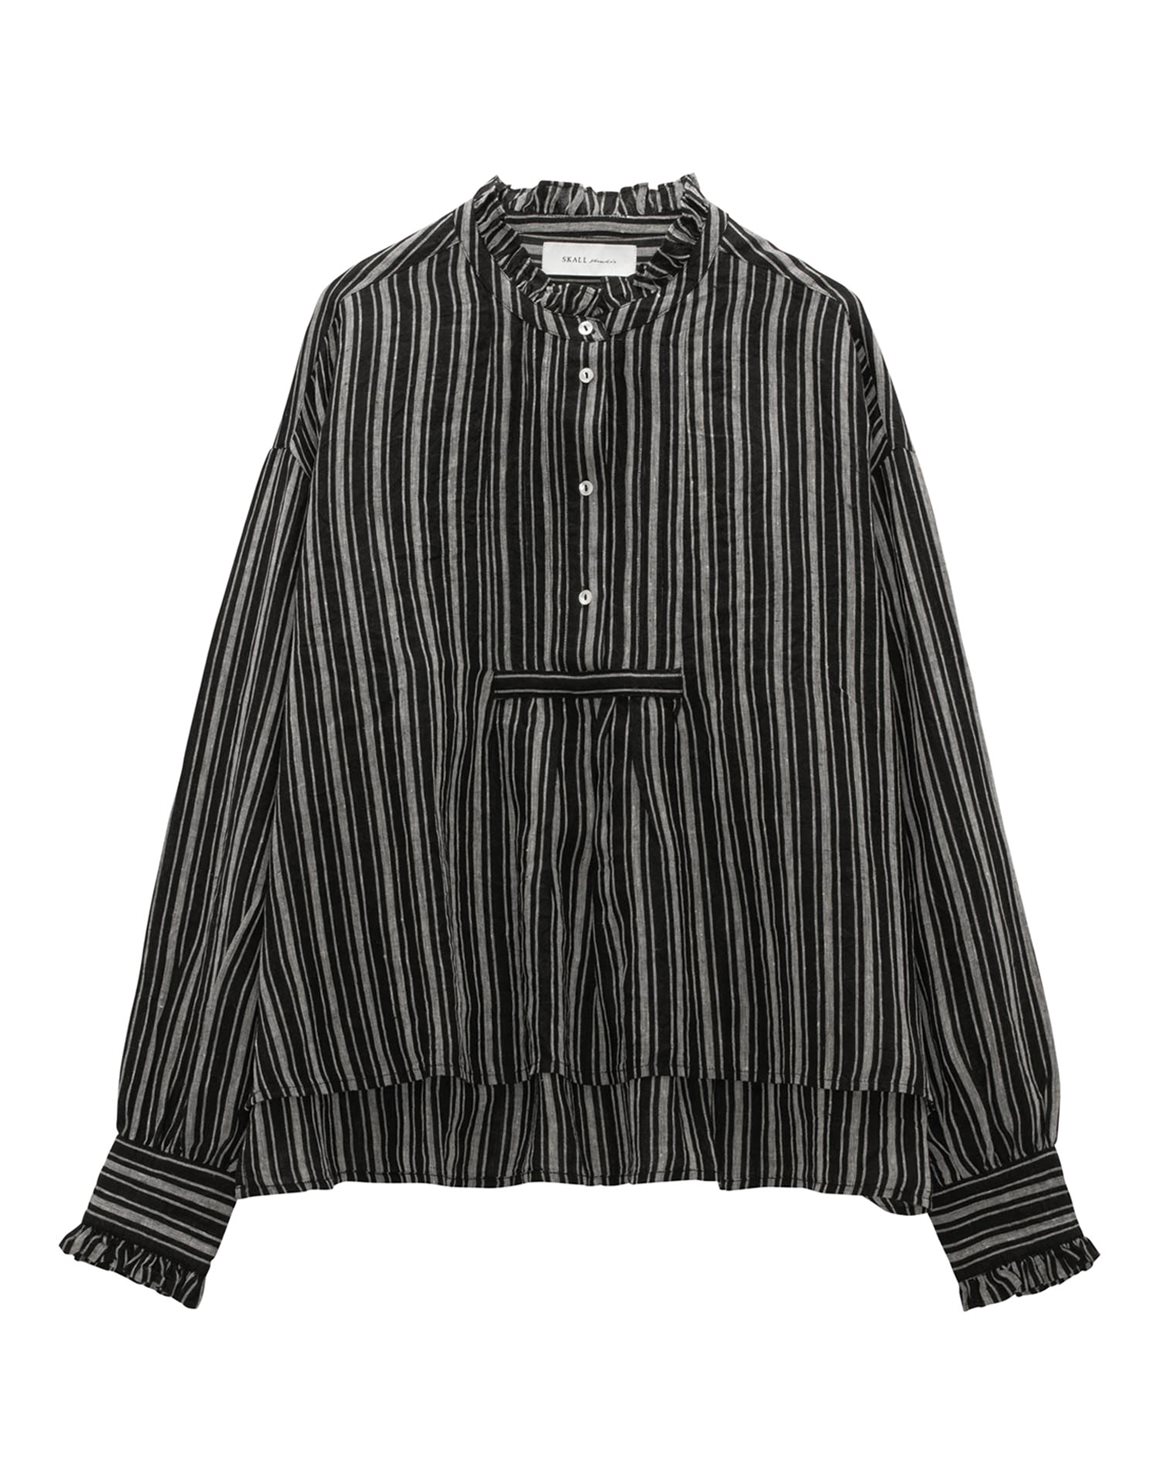 Vallgatan 12 - Skall Studio Florian Shirt Black/Grey Stripe